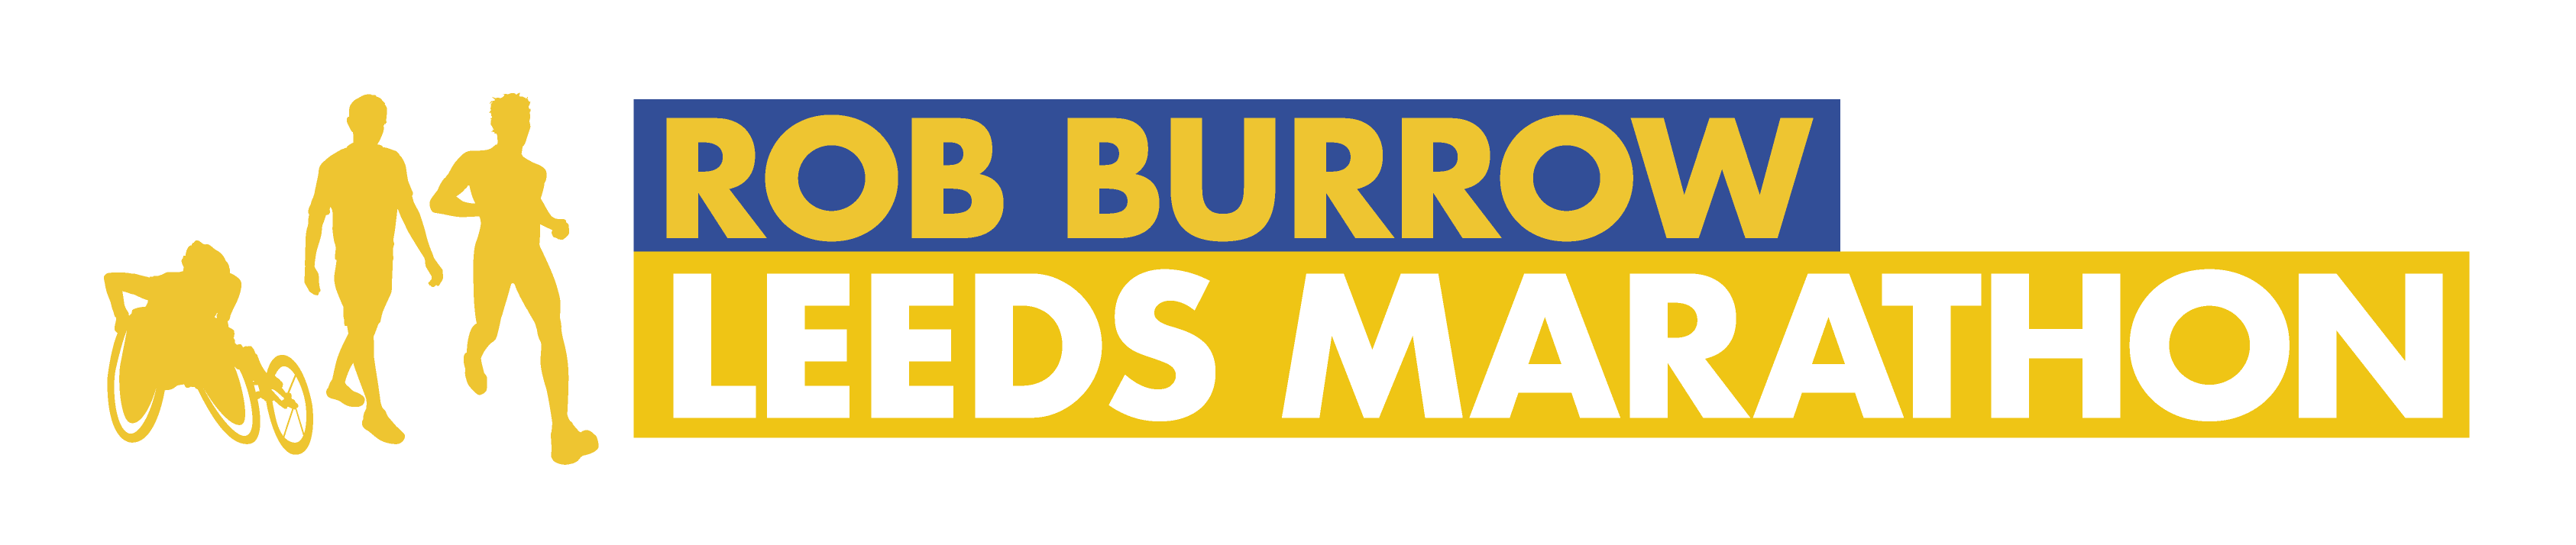 Rob Burrow Leeds Marathon Logo